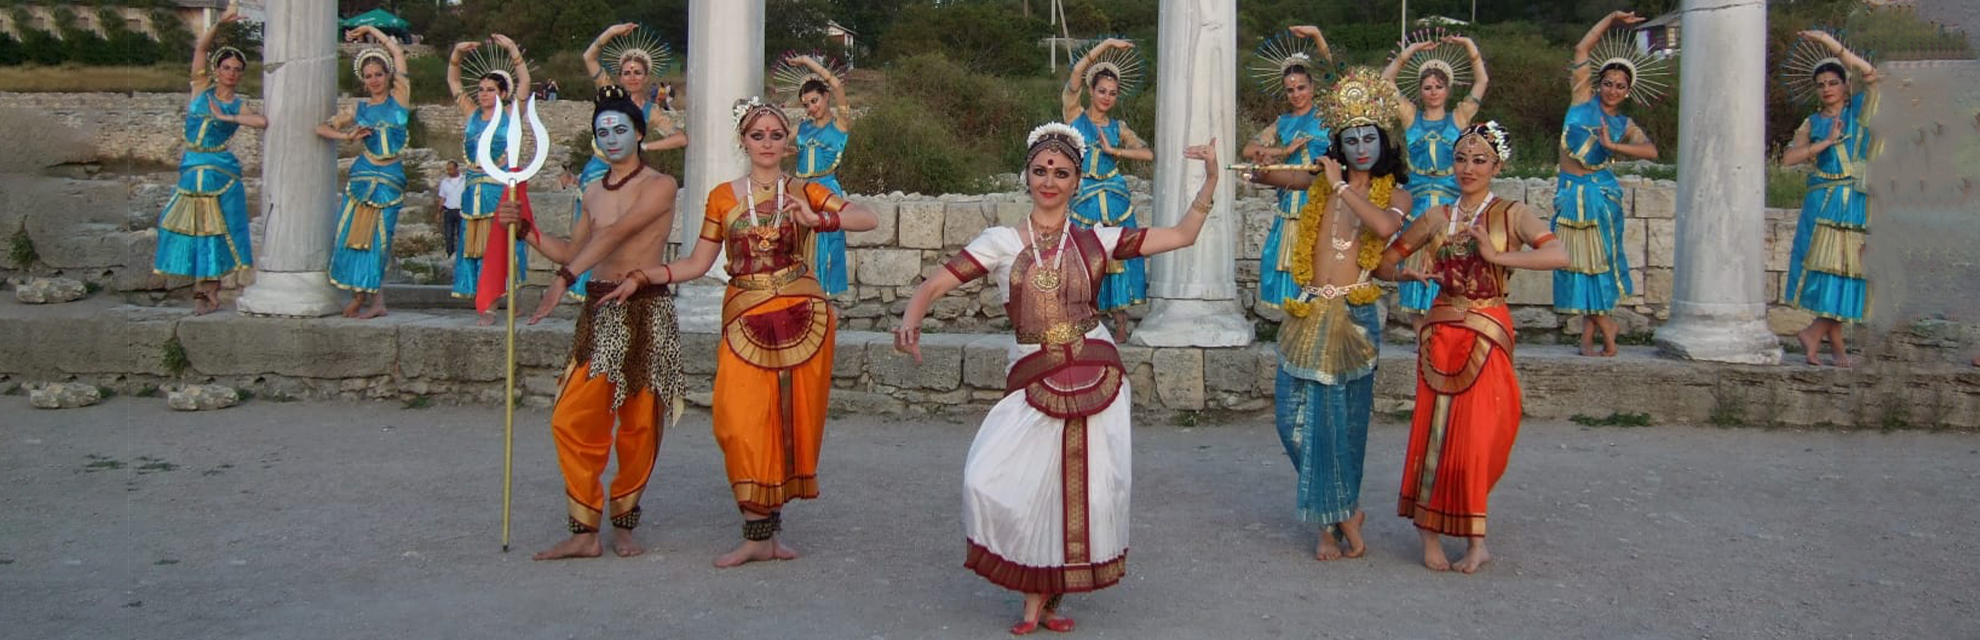 Indian Art and Culture | Ganna Smirnova | Global Indian